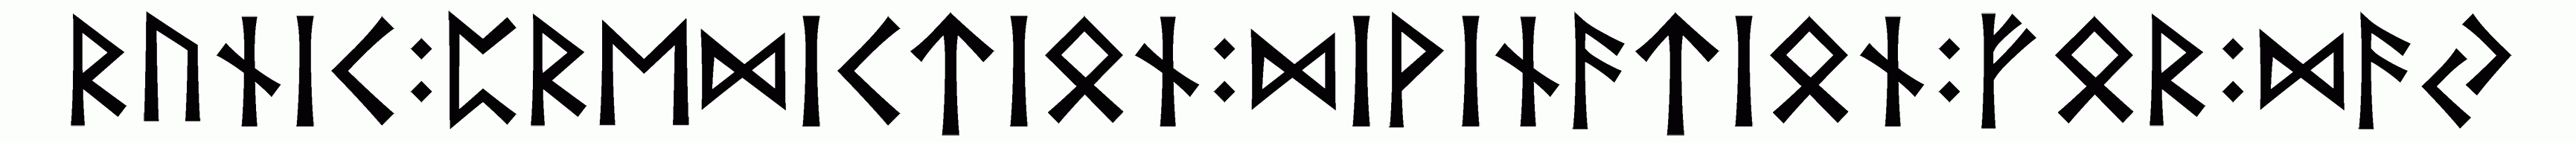 runic+prediction+divination+for+day - Напиши имя  RUNIC+PREDICTION+DIVINATION+FOR+DAY рунами  - ᚱᚢᚾᛁᚲ:ᛈᚱᛖᛞᛁᚲᛏᛁᛟᚾ:ᛞᛁᛁᚾᚨᛏᛁᛟᚾ:ᚠᛟᚱ:ᛞᚨᛃ - Значение и характер имени  RUNIC+PREDICTION+DIVINATION+FOR+DAY - 